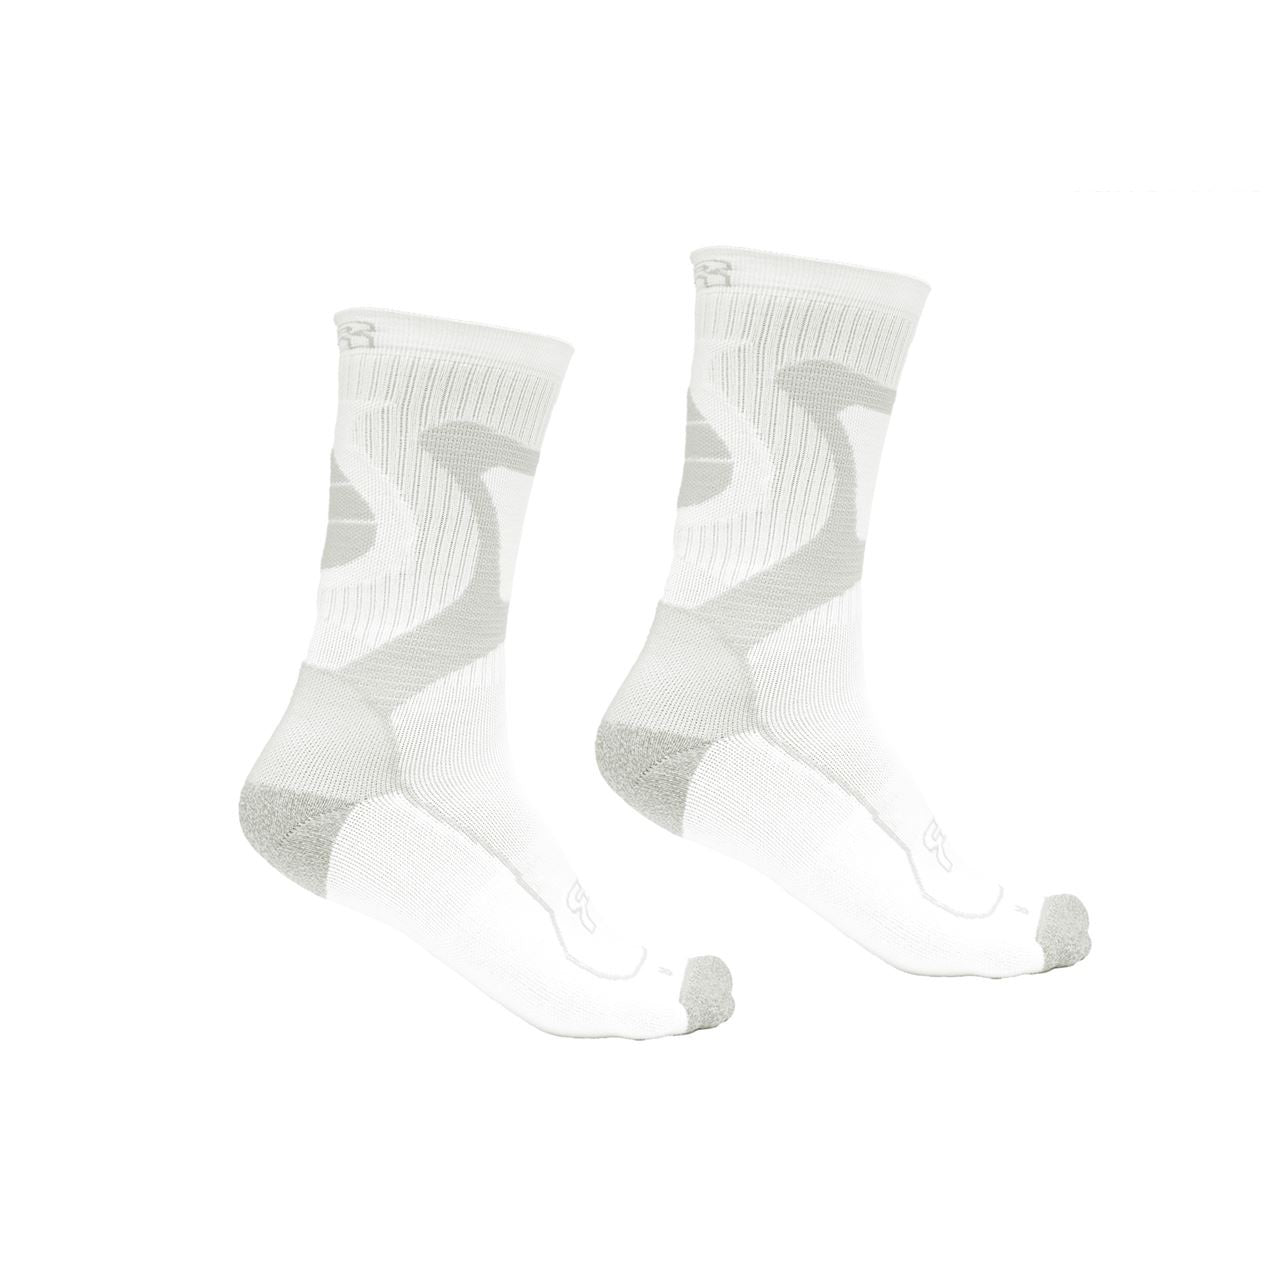 FR Nano Sports Socks - White/Grey